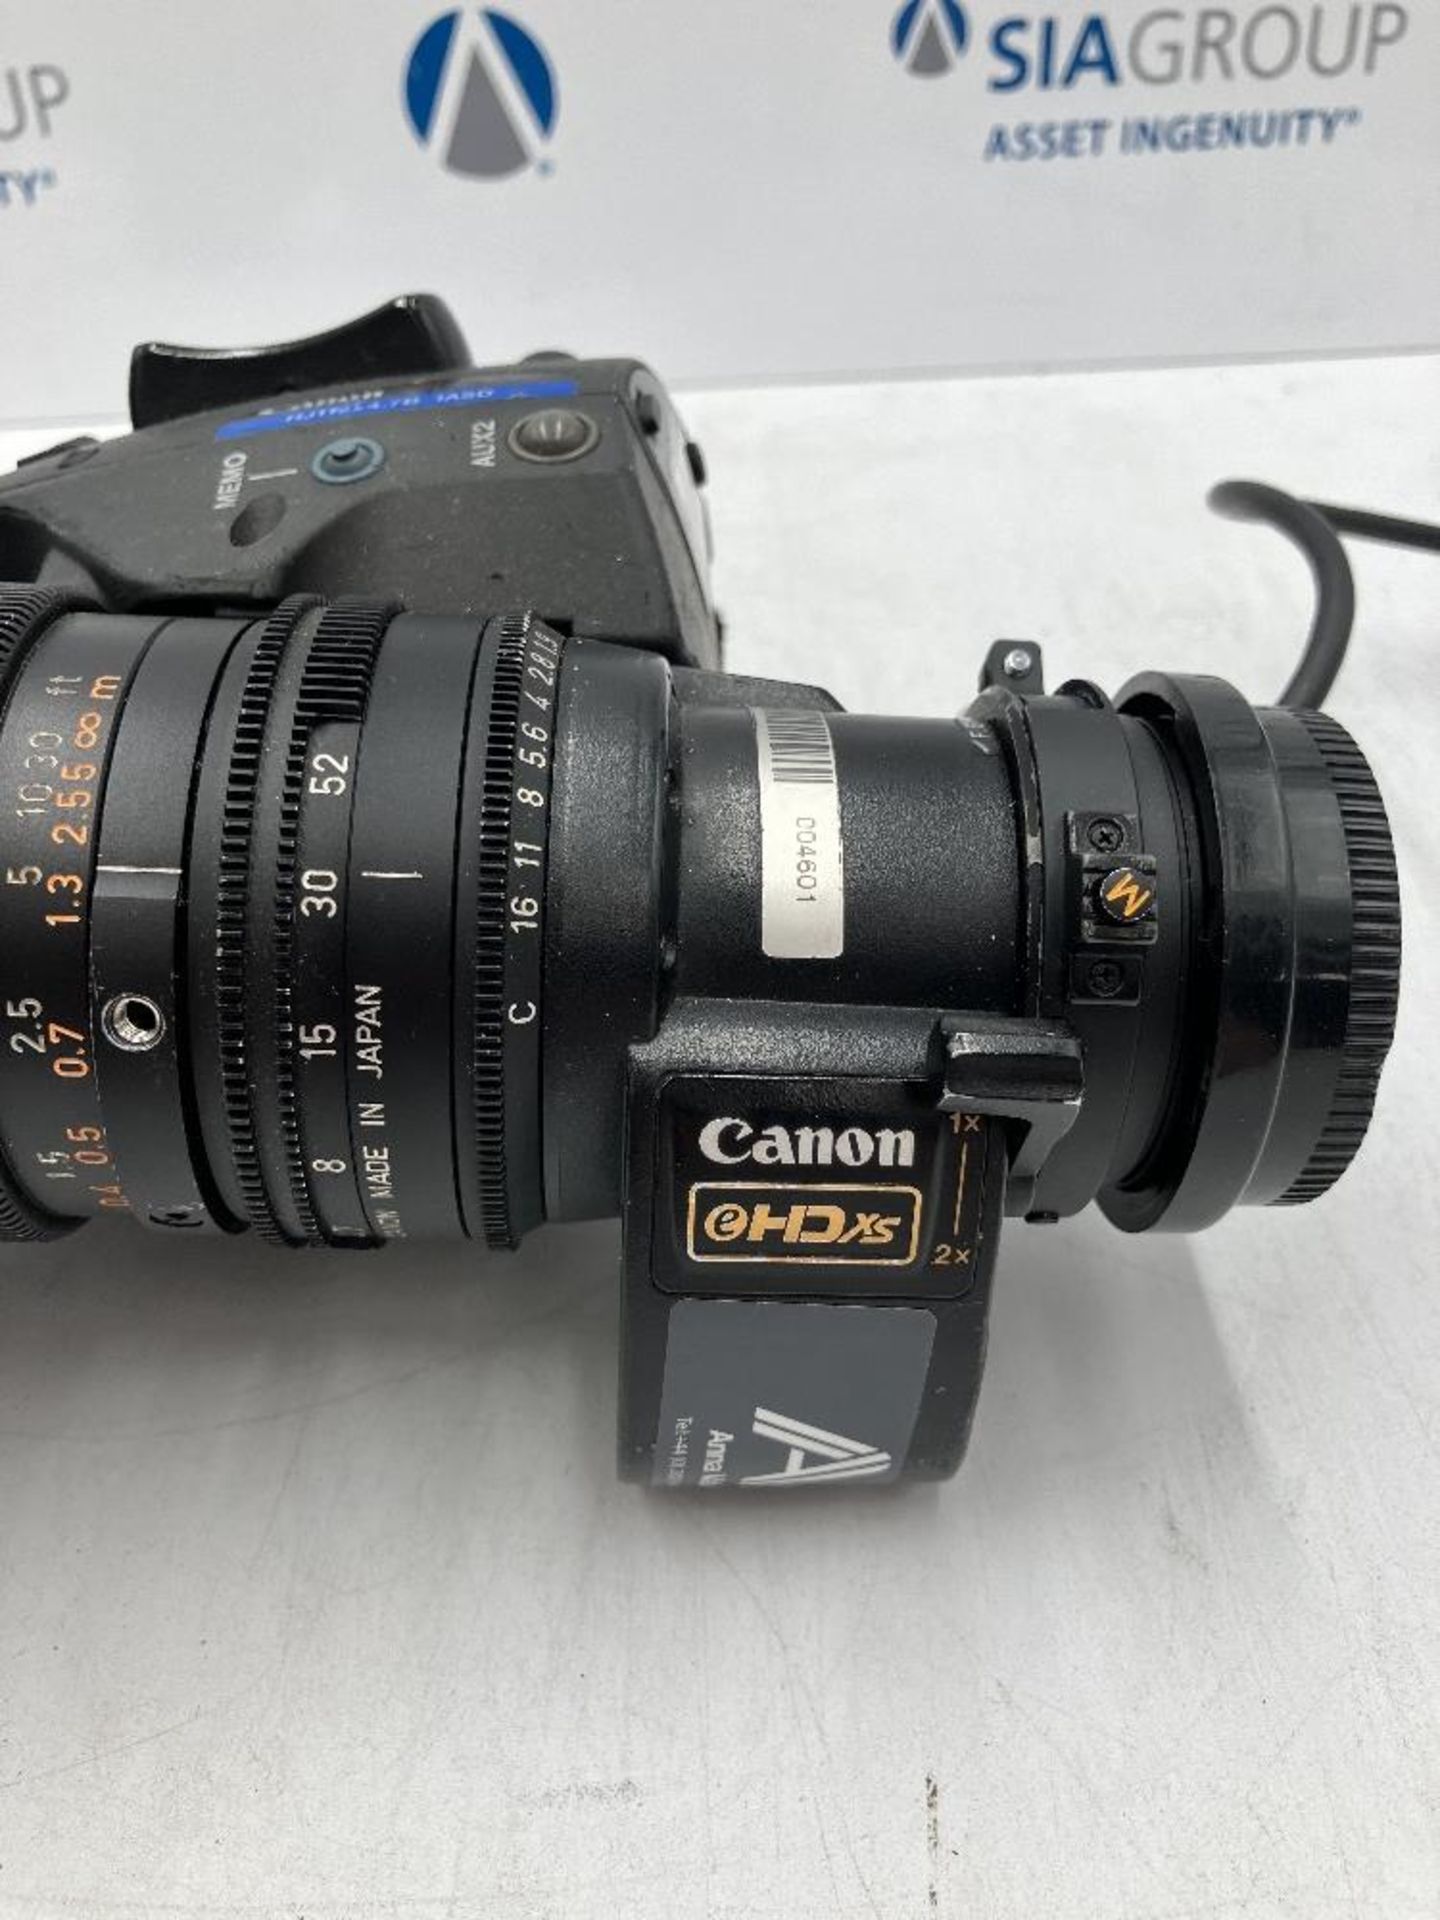 Canon HJ11x4.7 IASD HDTV Zoom Lens Kit - Image 6 of 14